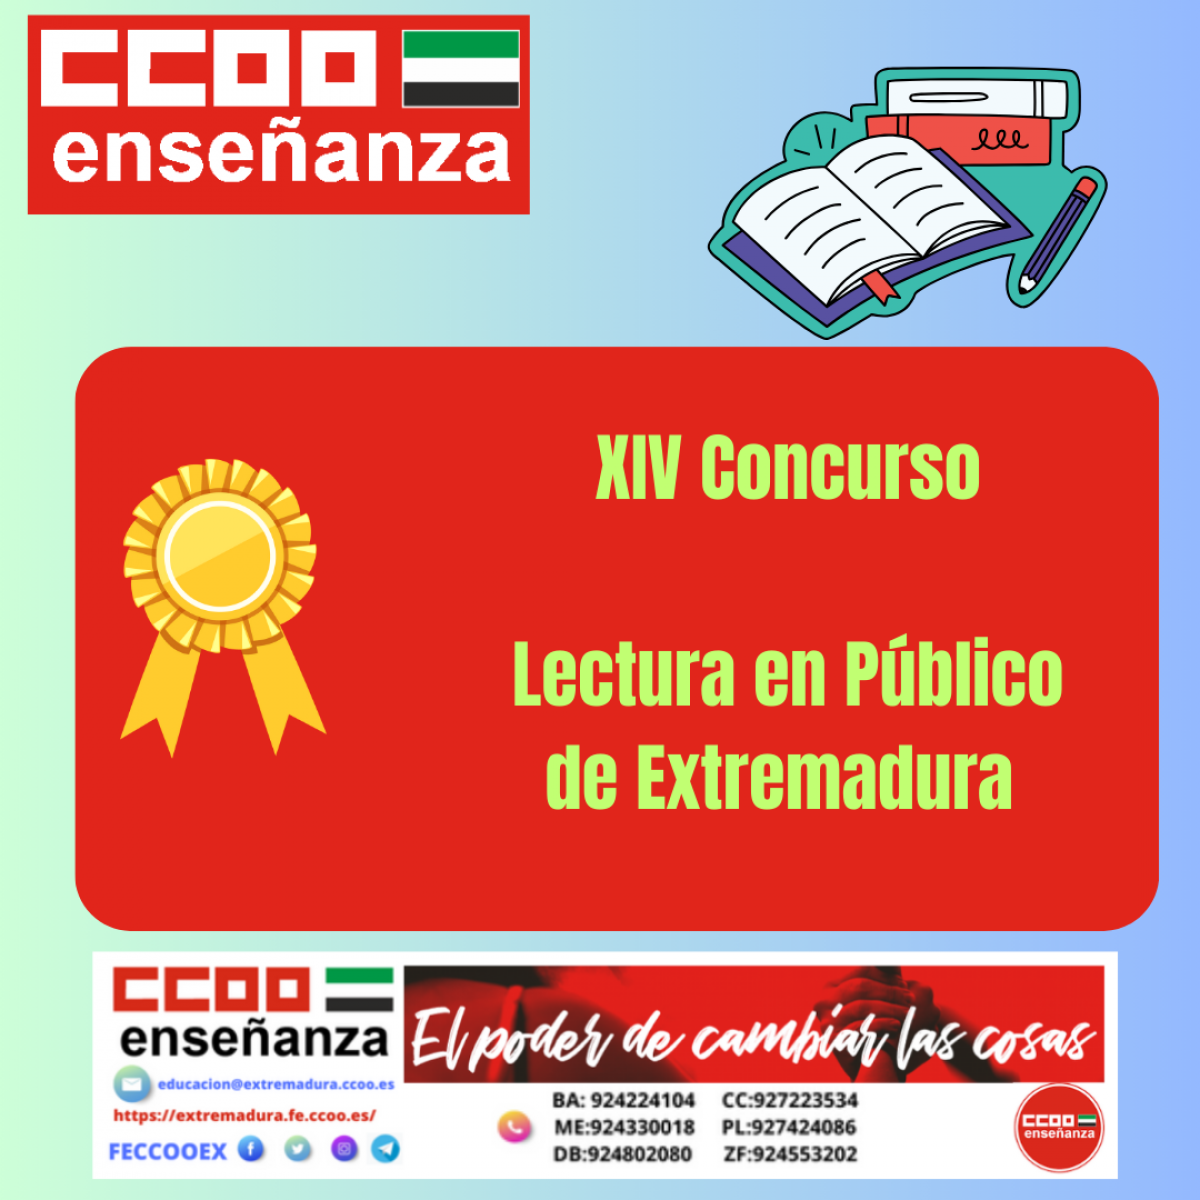 XIV Concurso Lectura en Pblico de Extremadura